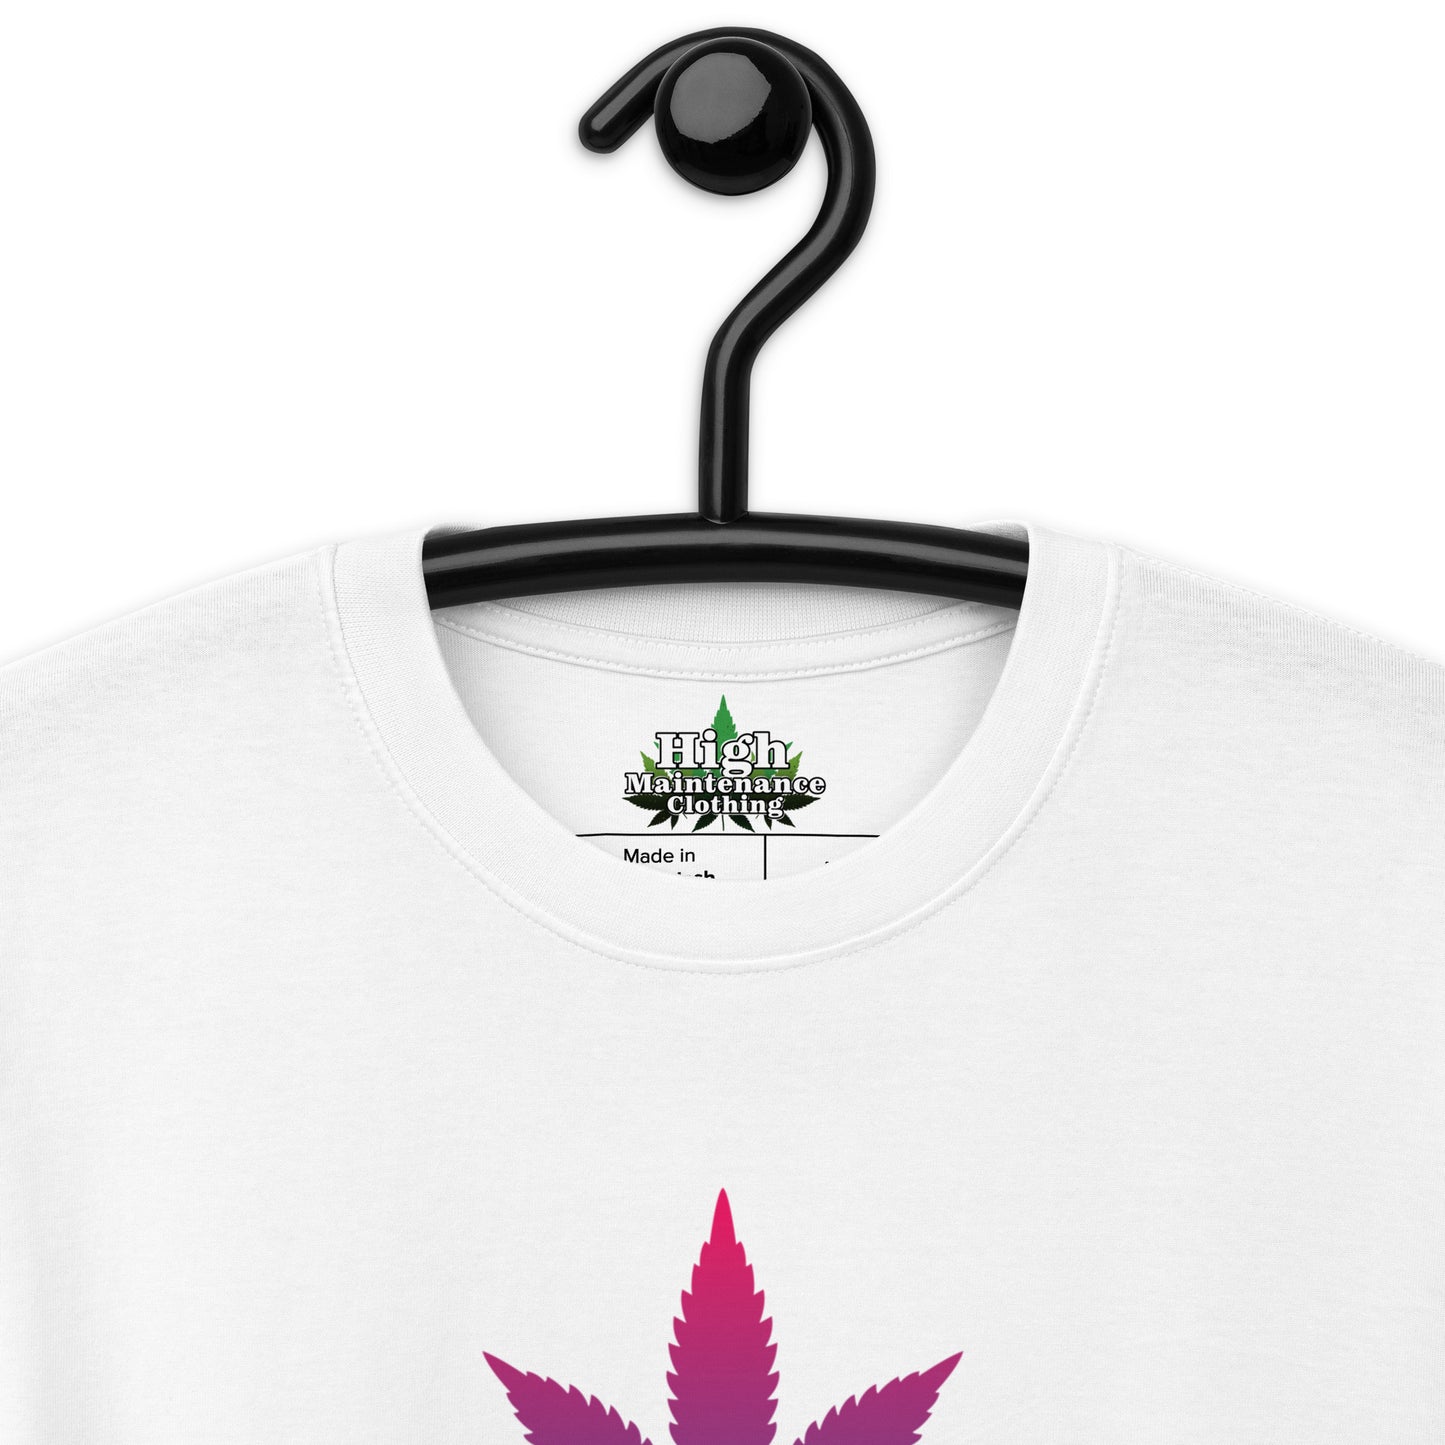 Men’s Cannabis T-Shirt